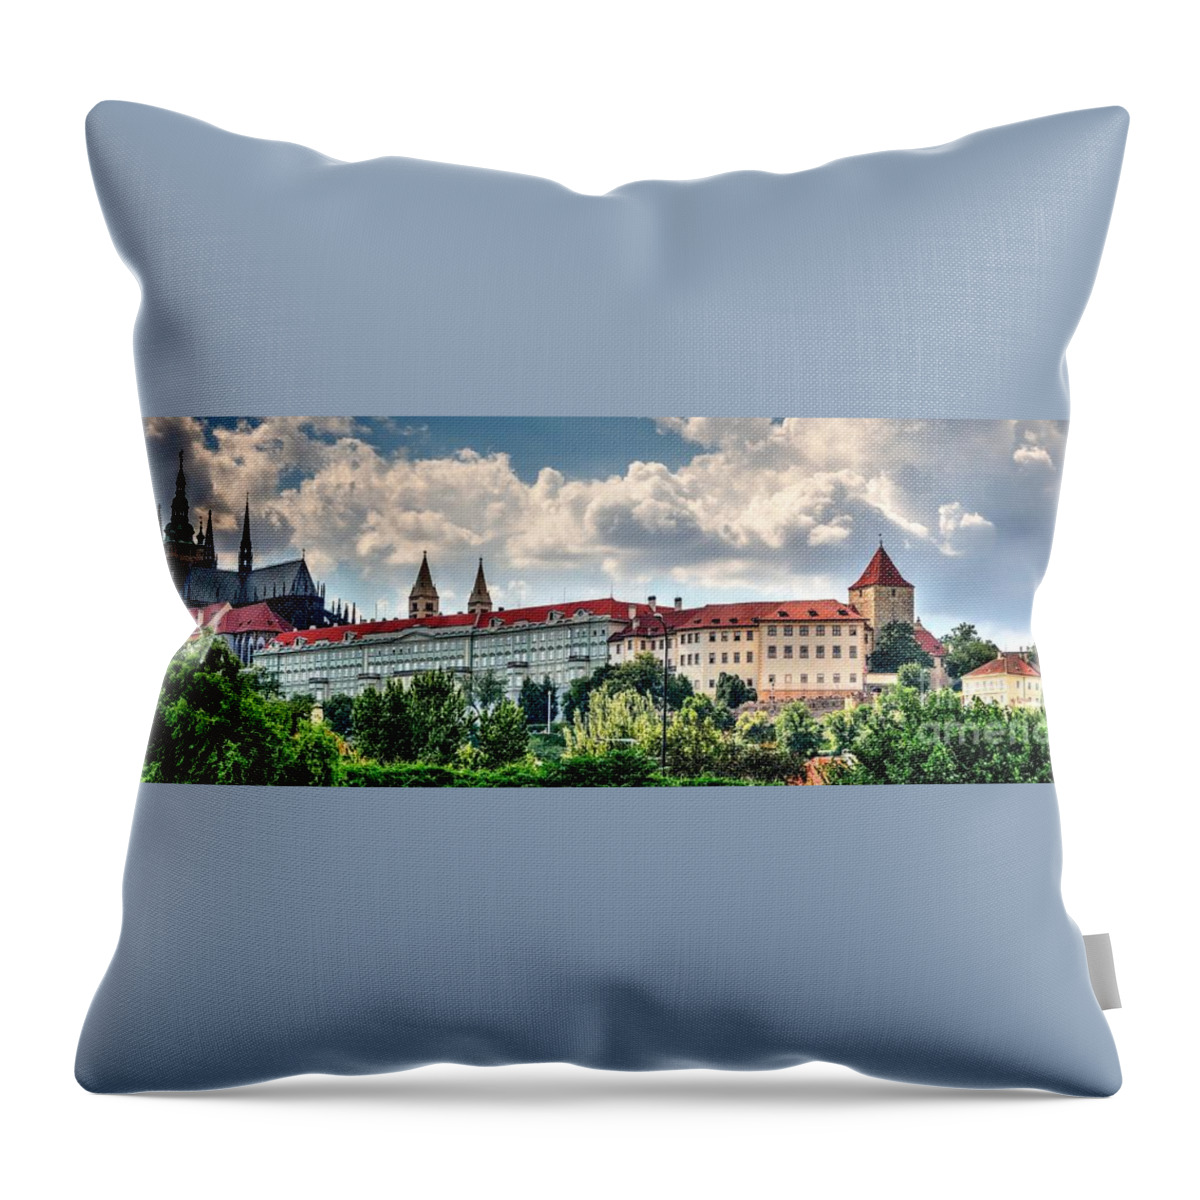 Prague Castle Throw Pillow featuring the photograph Prague Castle by Joe Ng